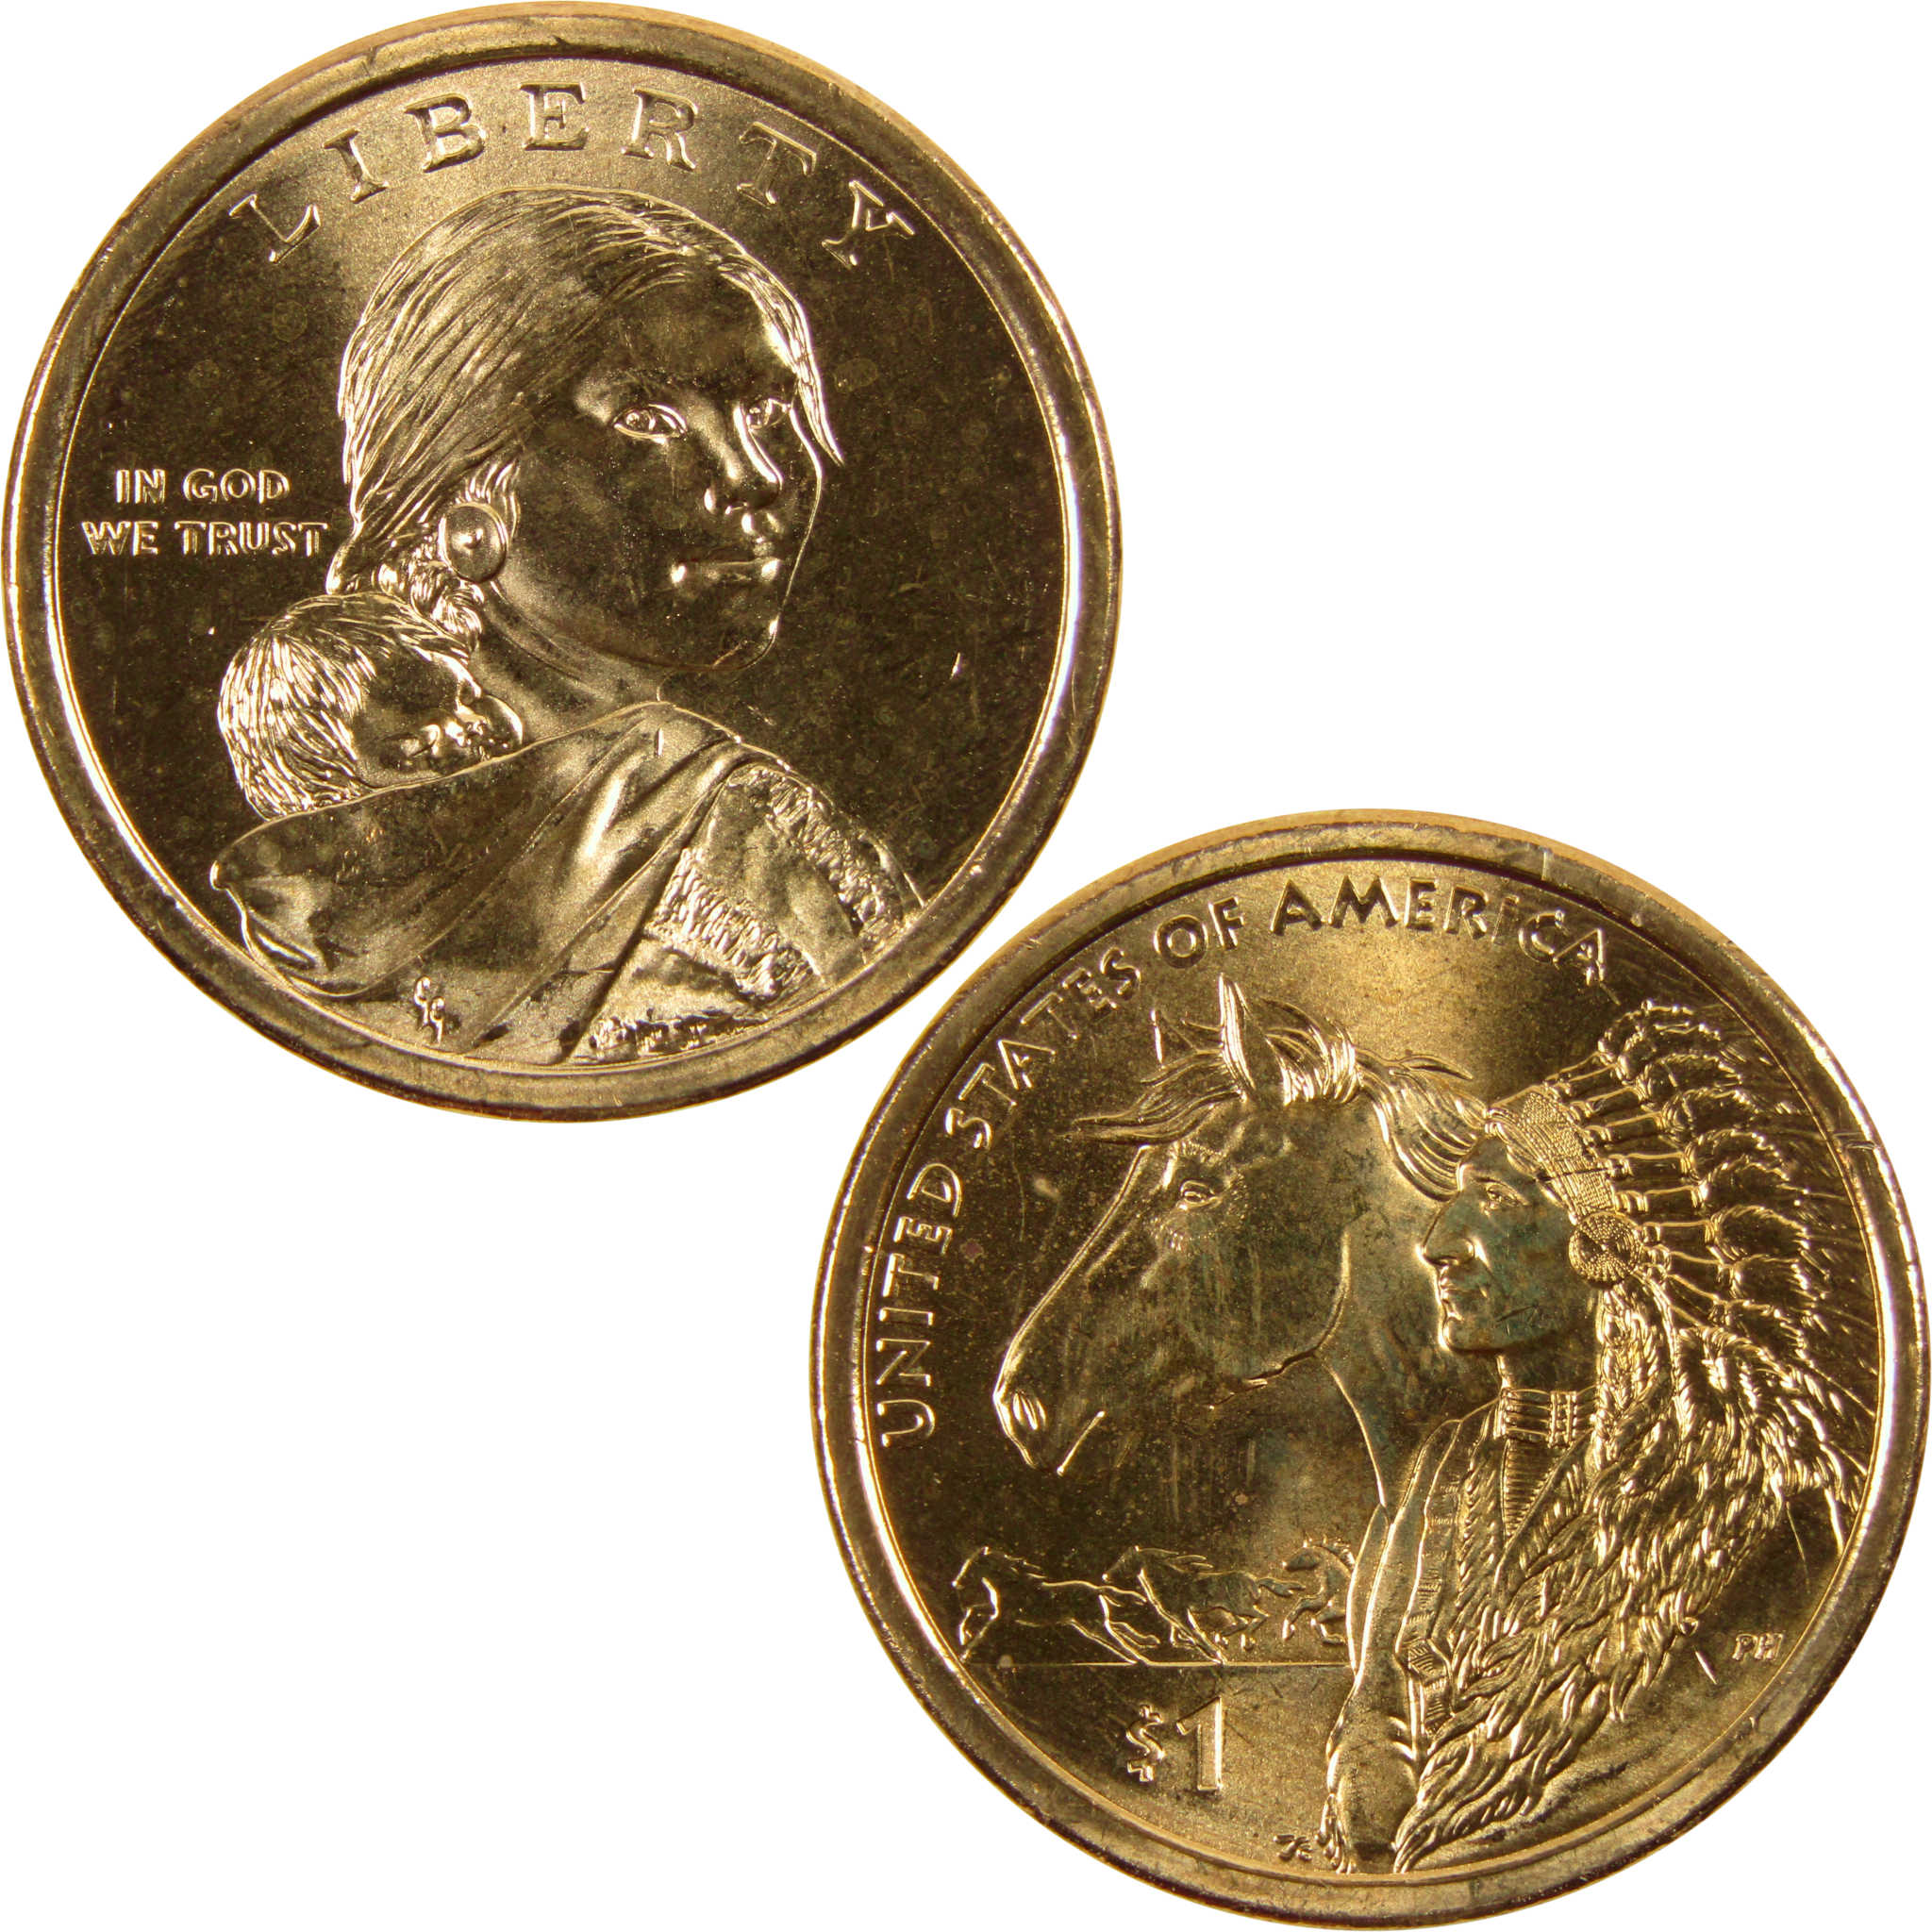 2012 D Trade Routes Native American Dollar BU Uncirculated $1 Coin